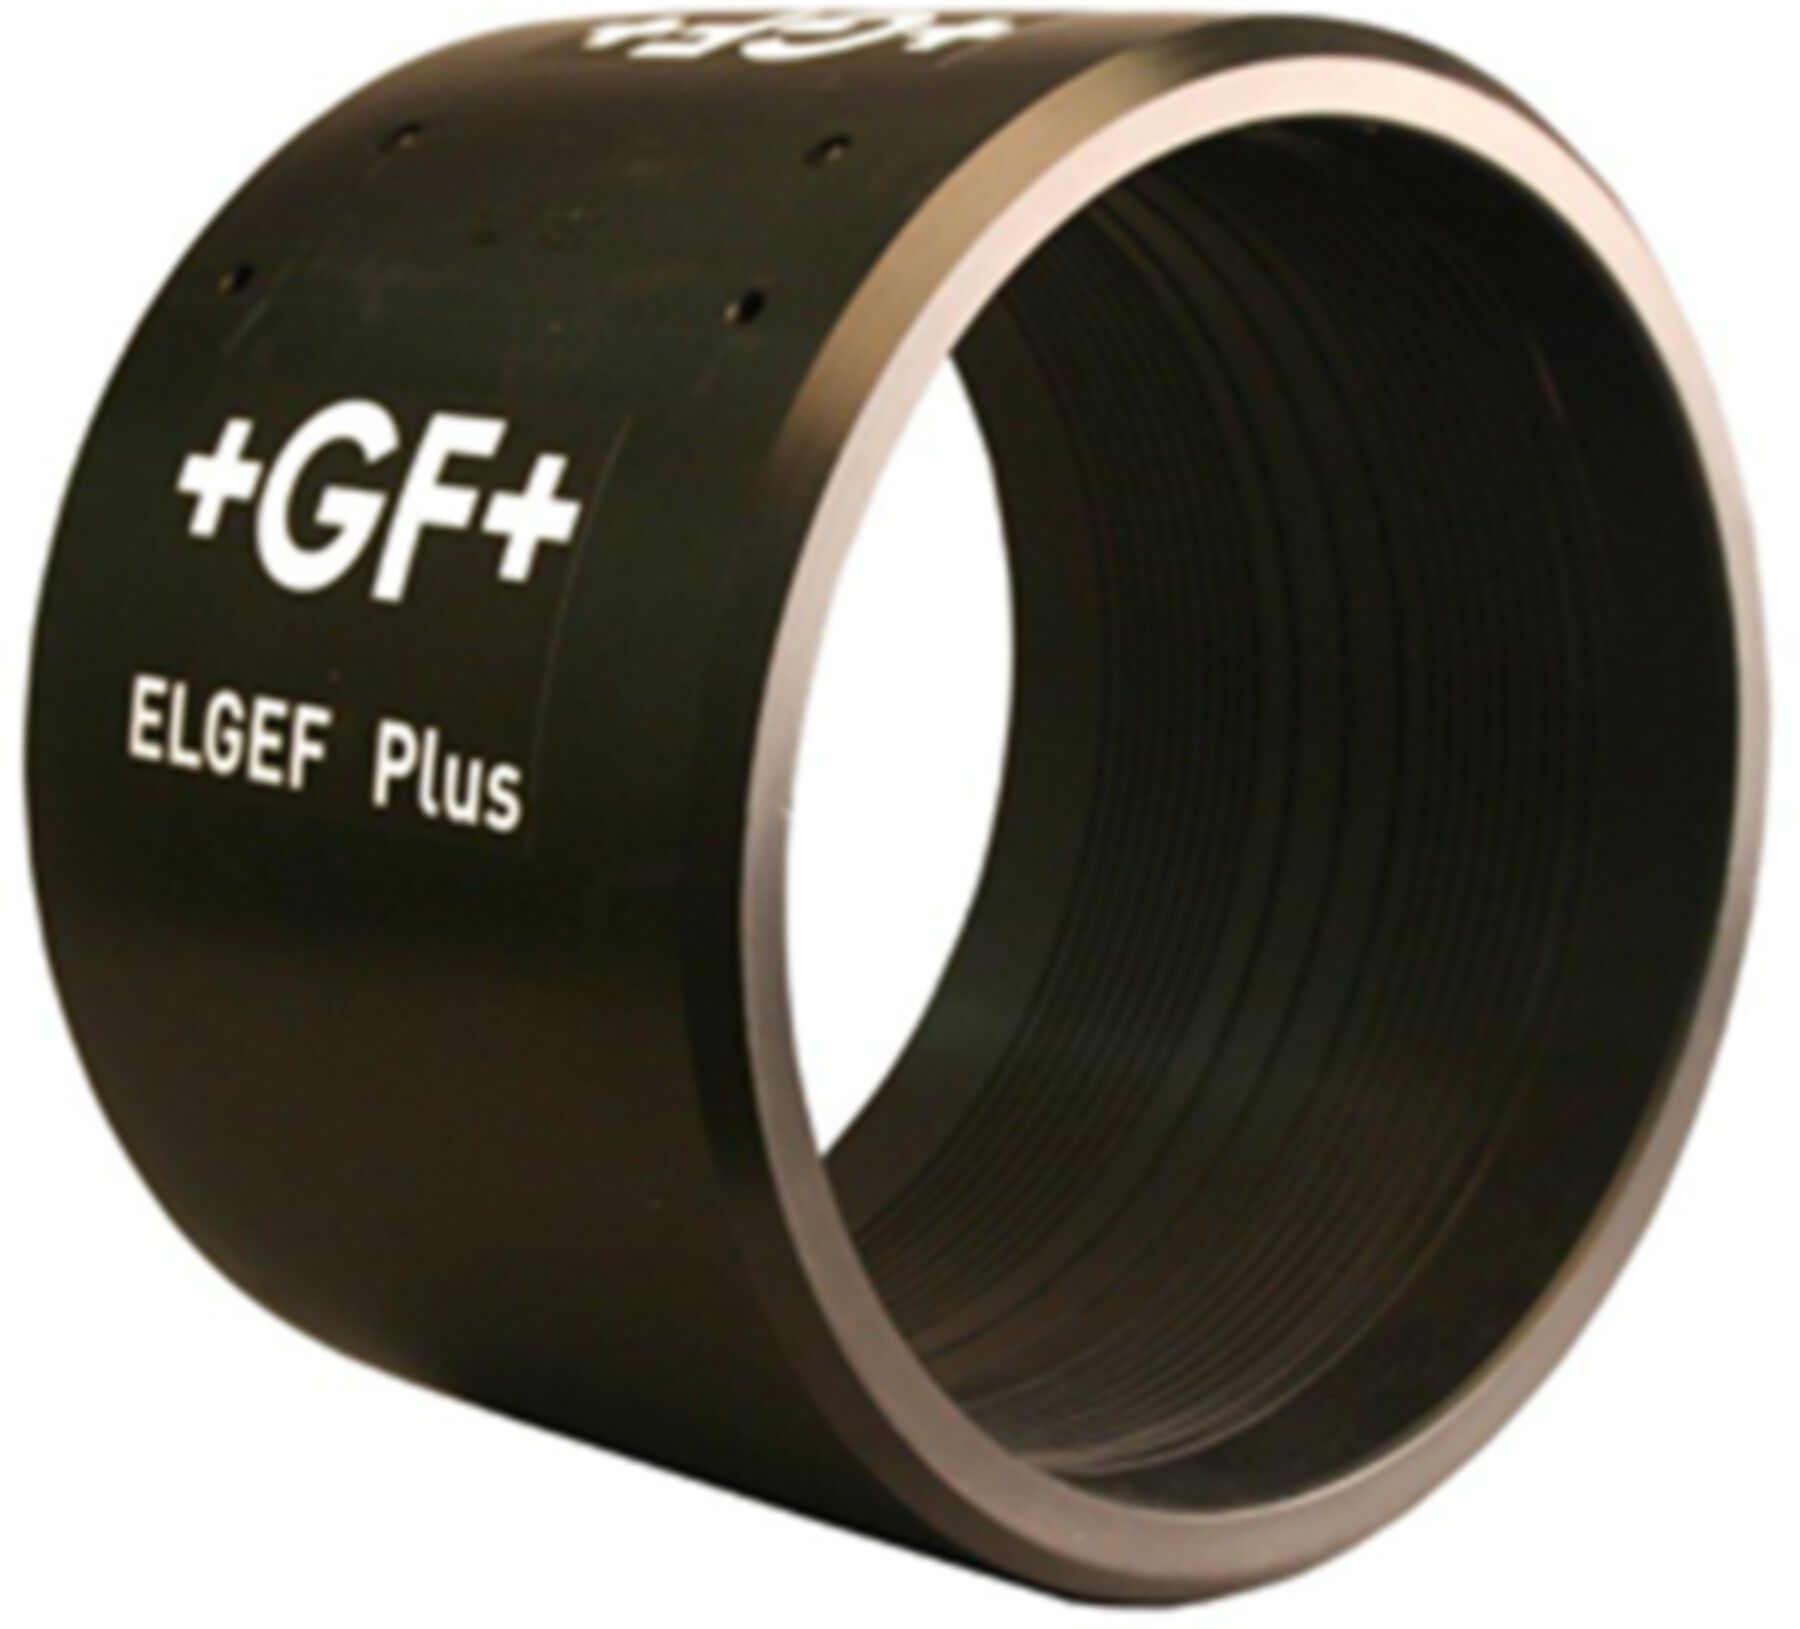 ELGEF Muffe PN 16 d 250mm 753 911 621 - ELGEF Plus Elektroschweissfittinge